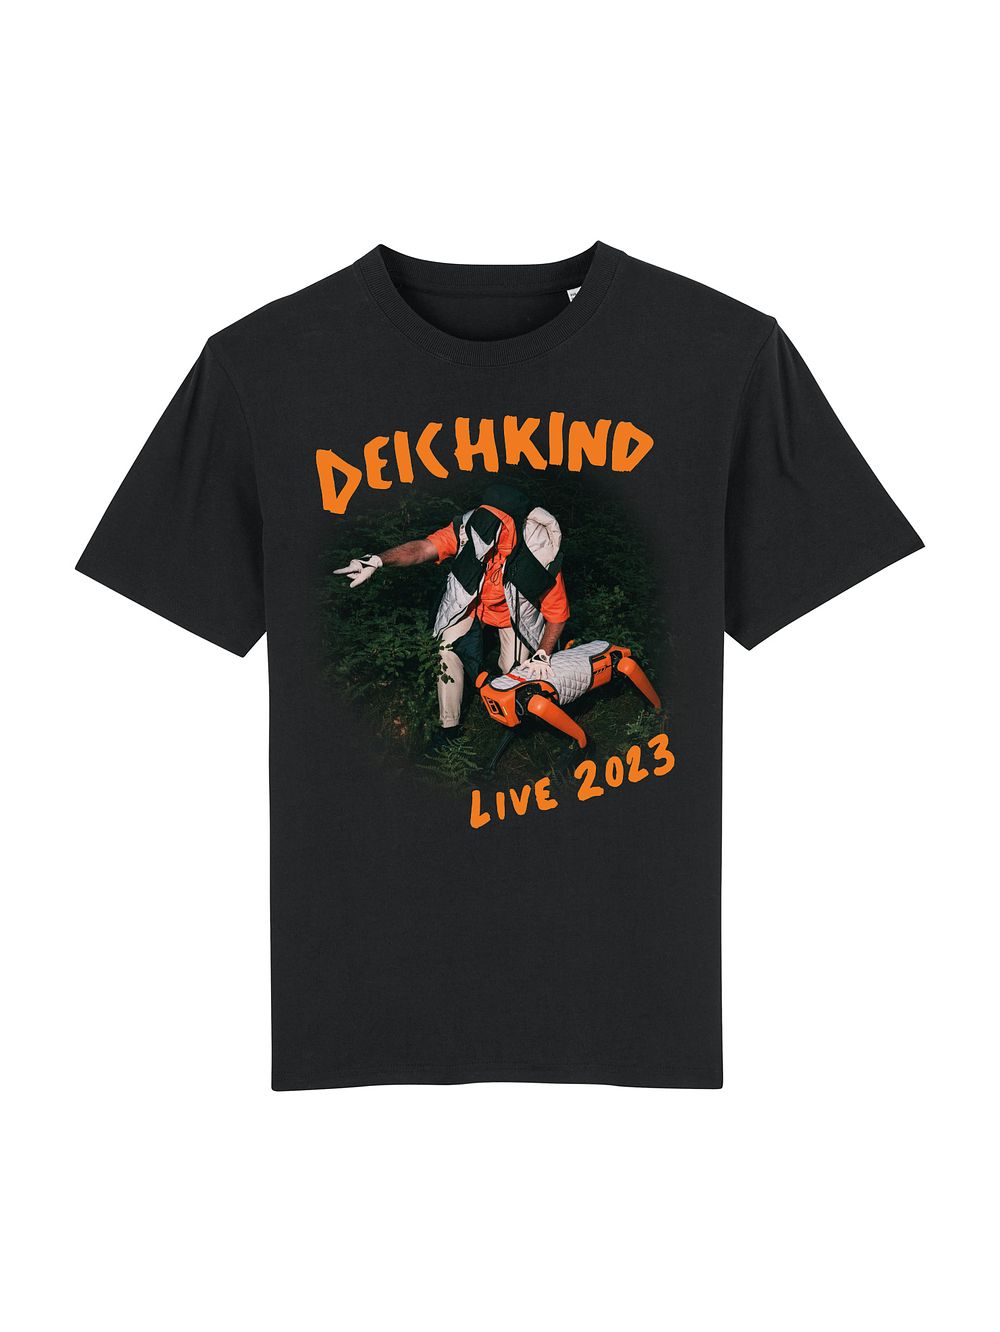 deichkind tour 2023 tshirt